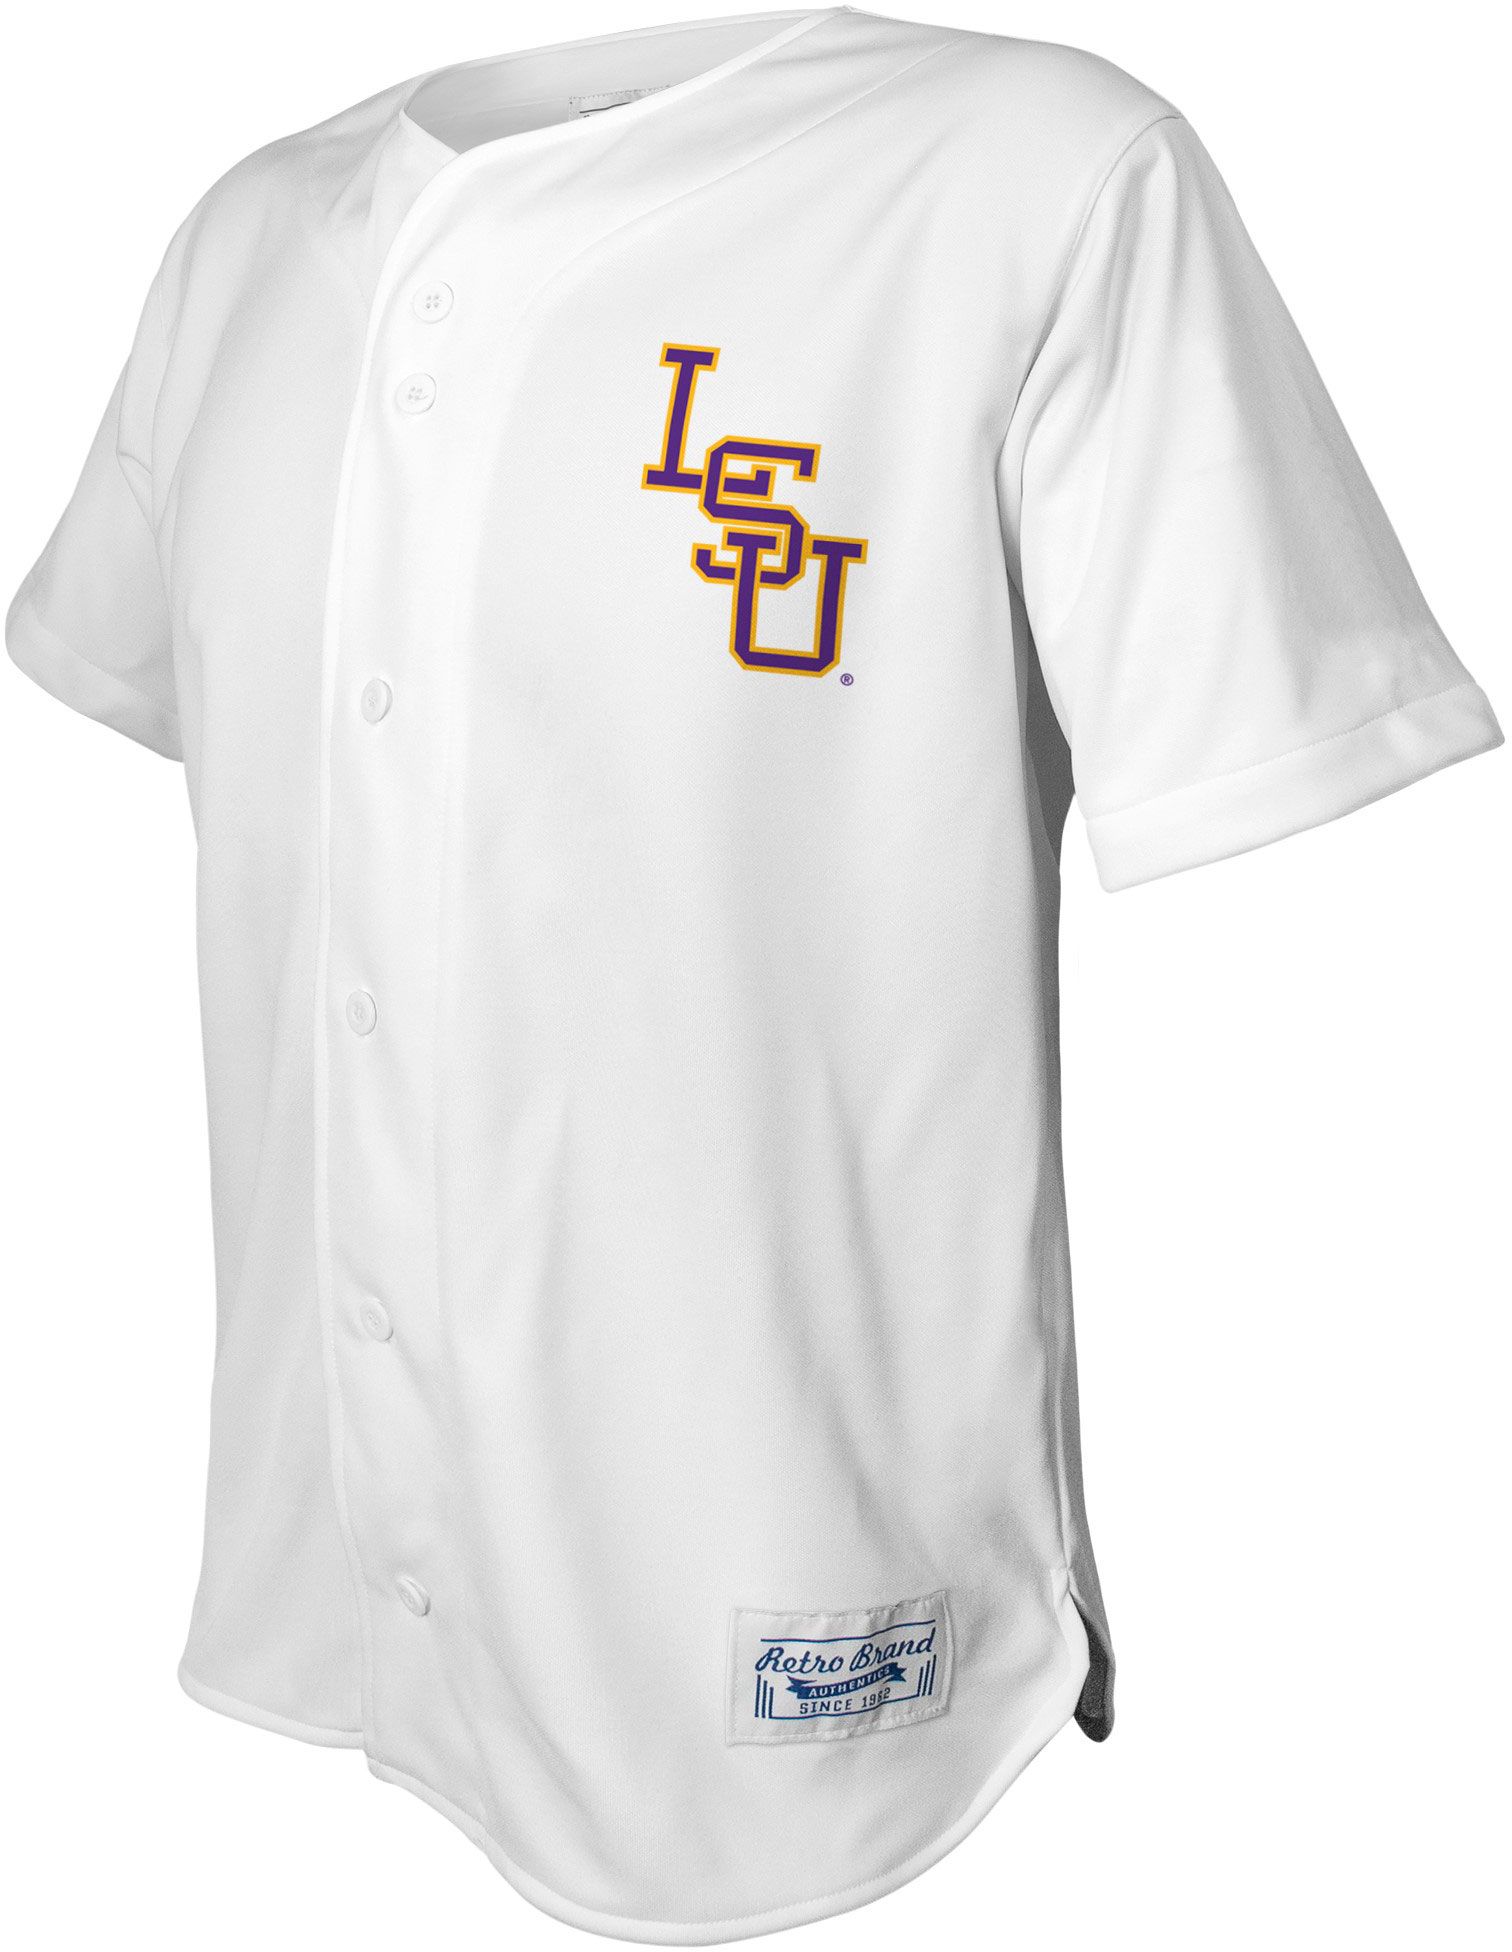 LSU Tigers throwback jersey